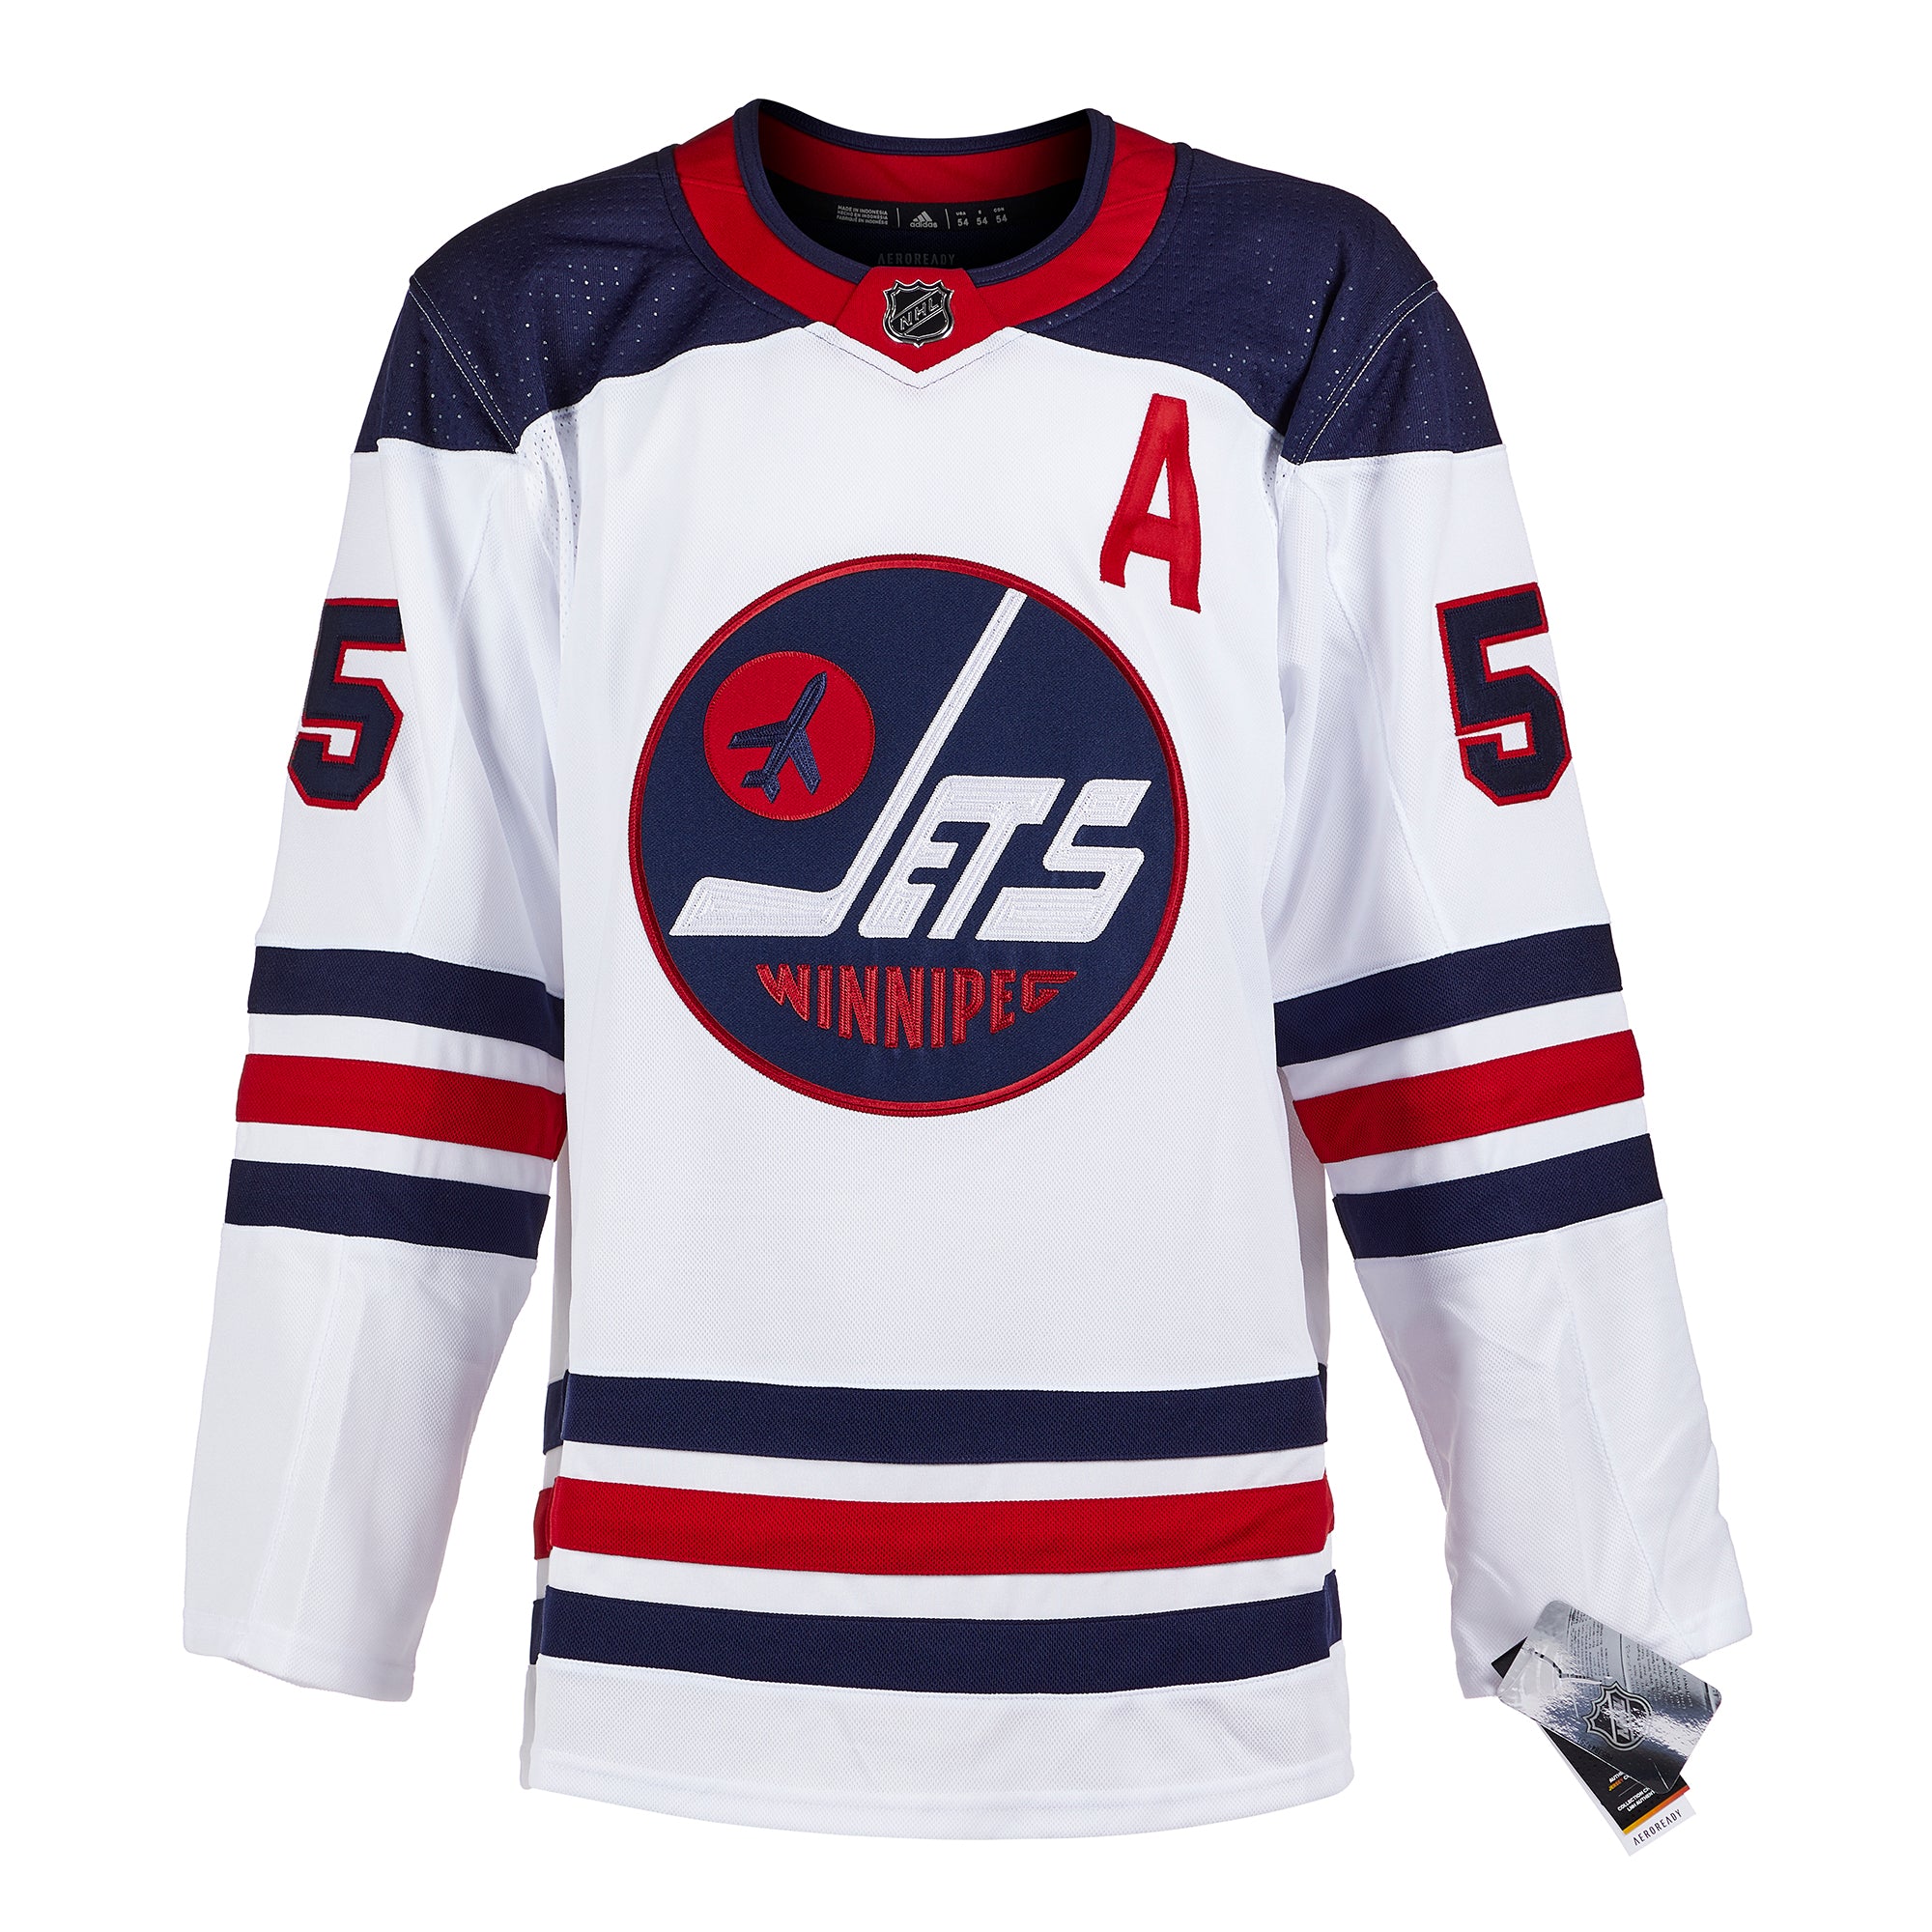 The Heritage jersey for Mark Scheifele of the Winnipeg Jets hangs in